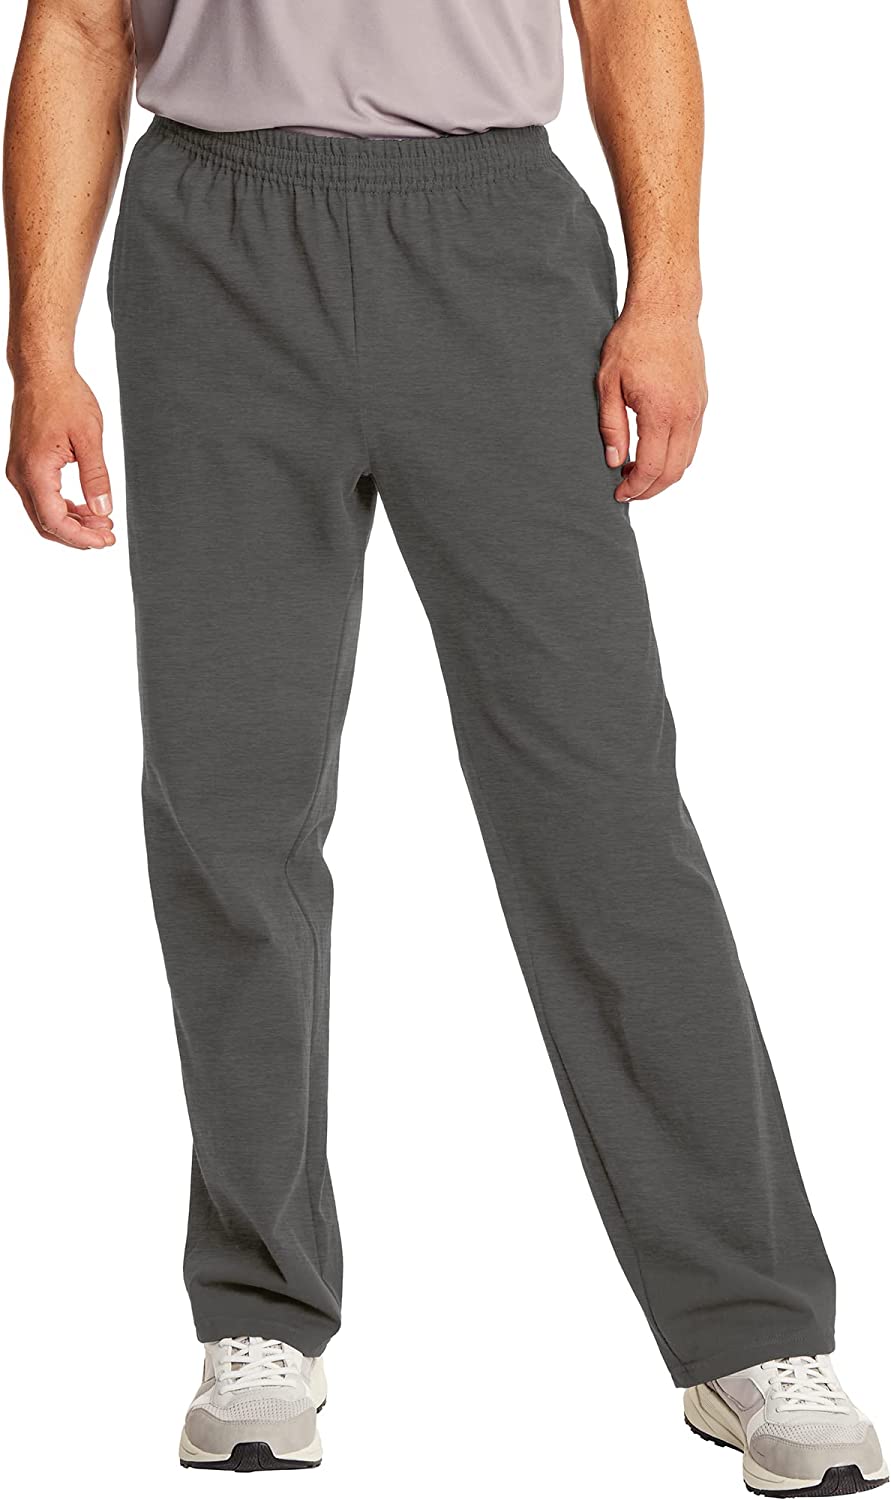 Hanes Essentials Sweatpants, Men's Cotton Jersey Pants with Pockets, 33” |  eBay